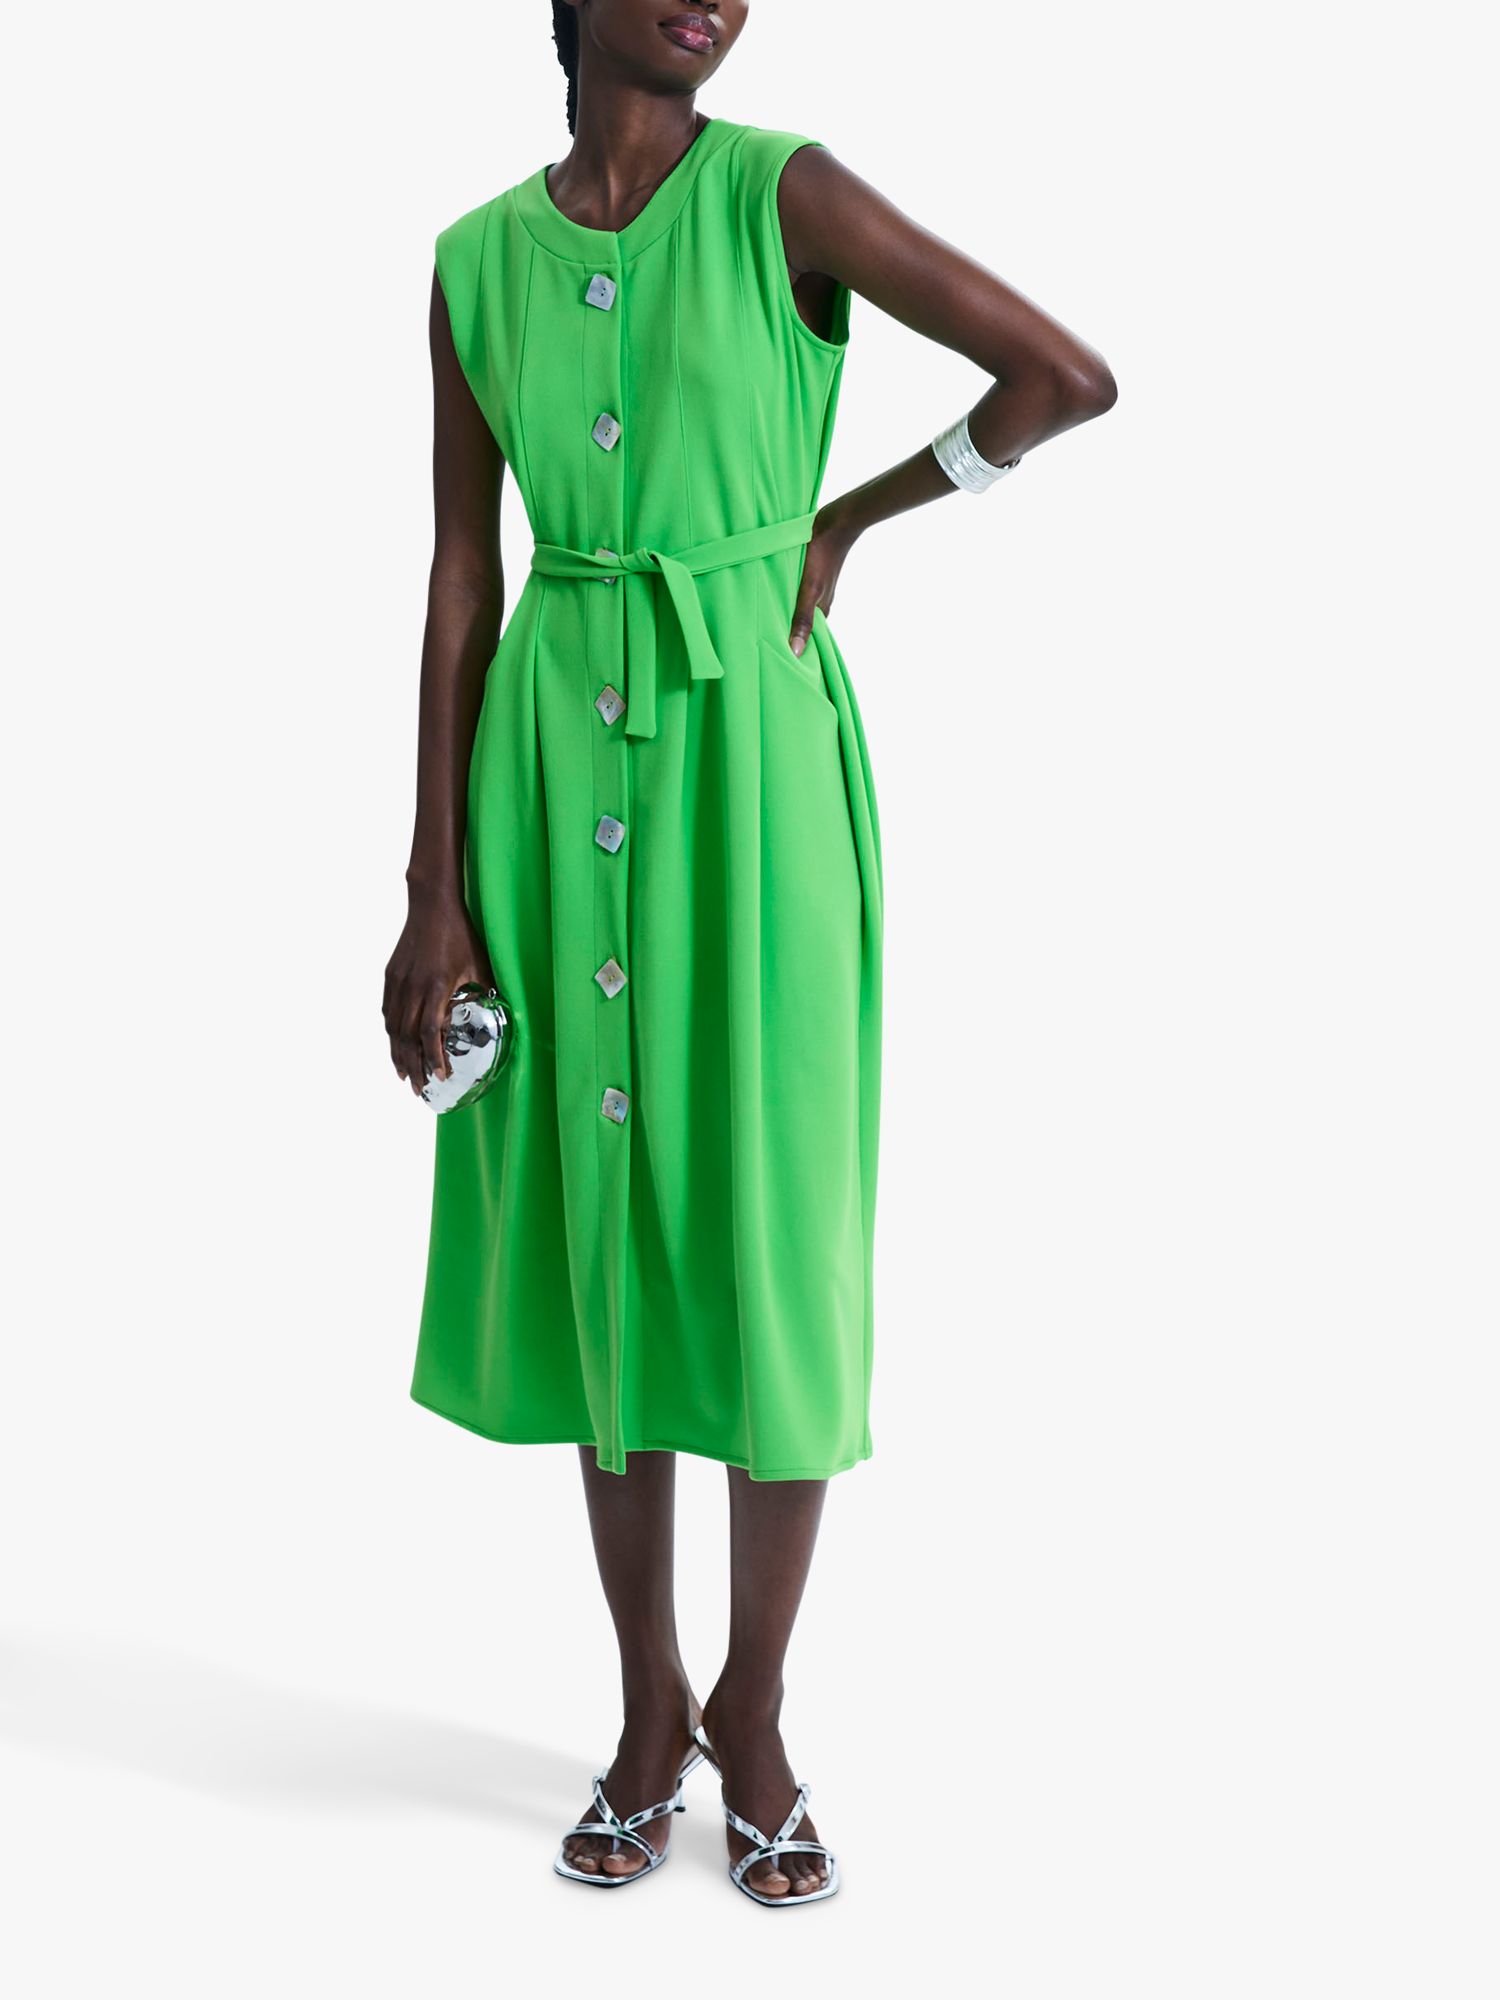 James Lakeland Button Front Dress, Green, 8